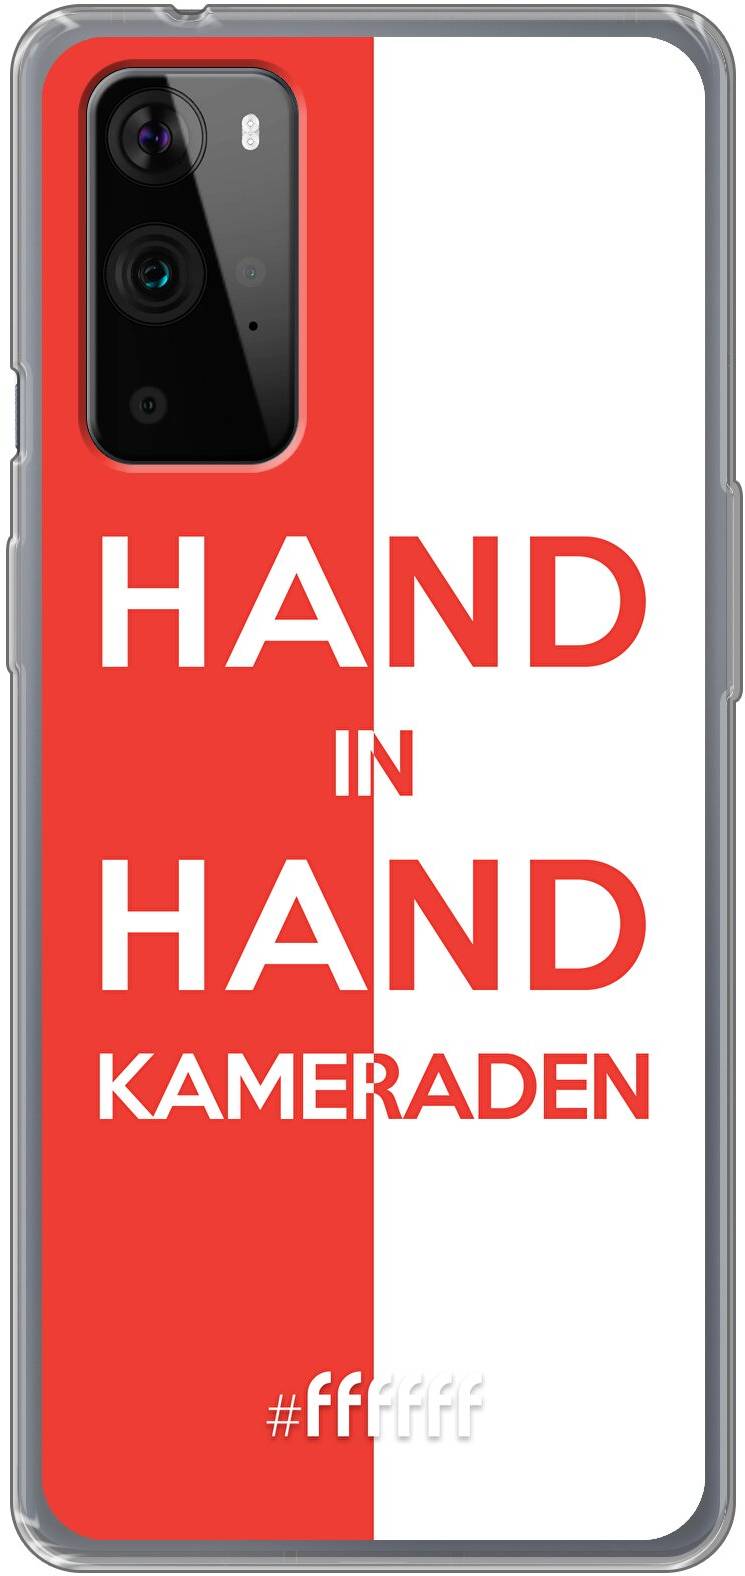 Feyenoord - Hand in hand, kameraden 9 Pro